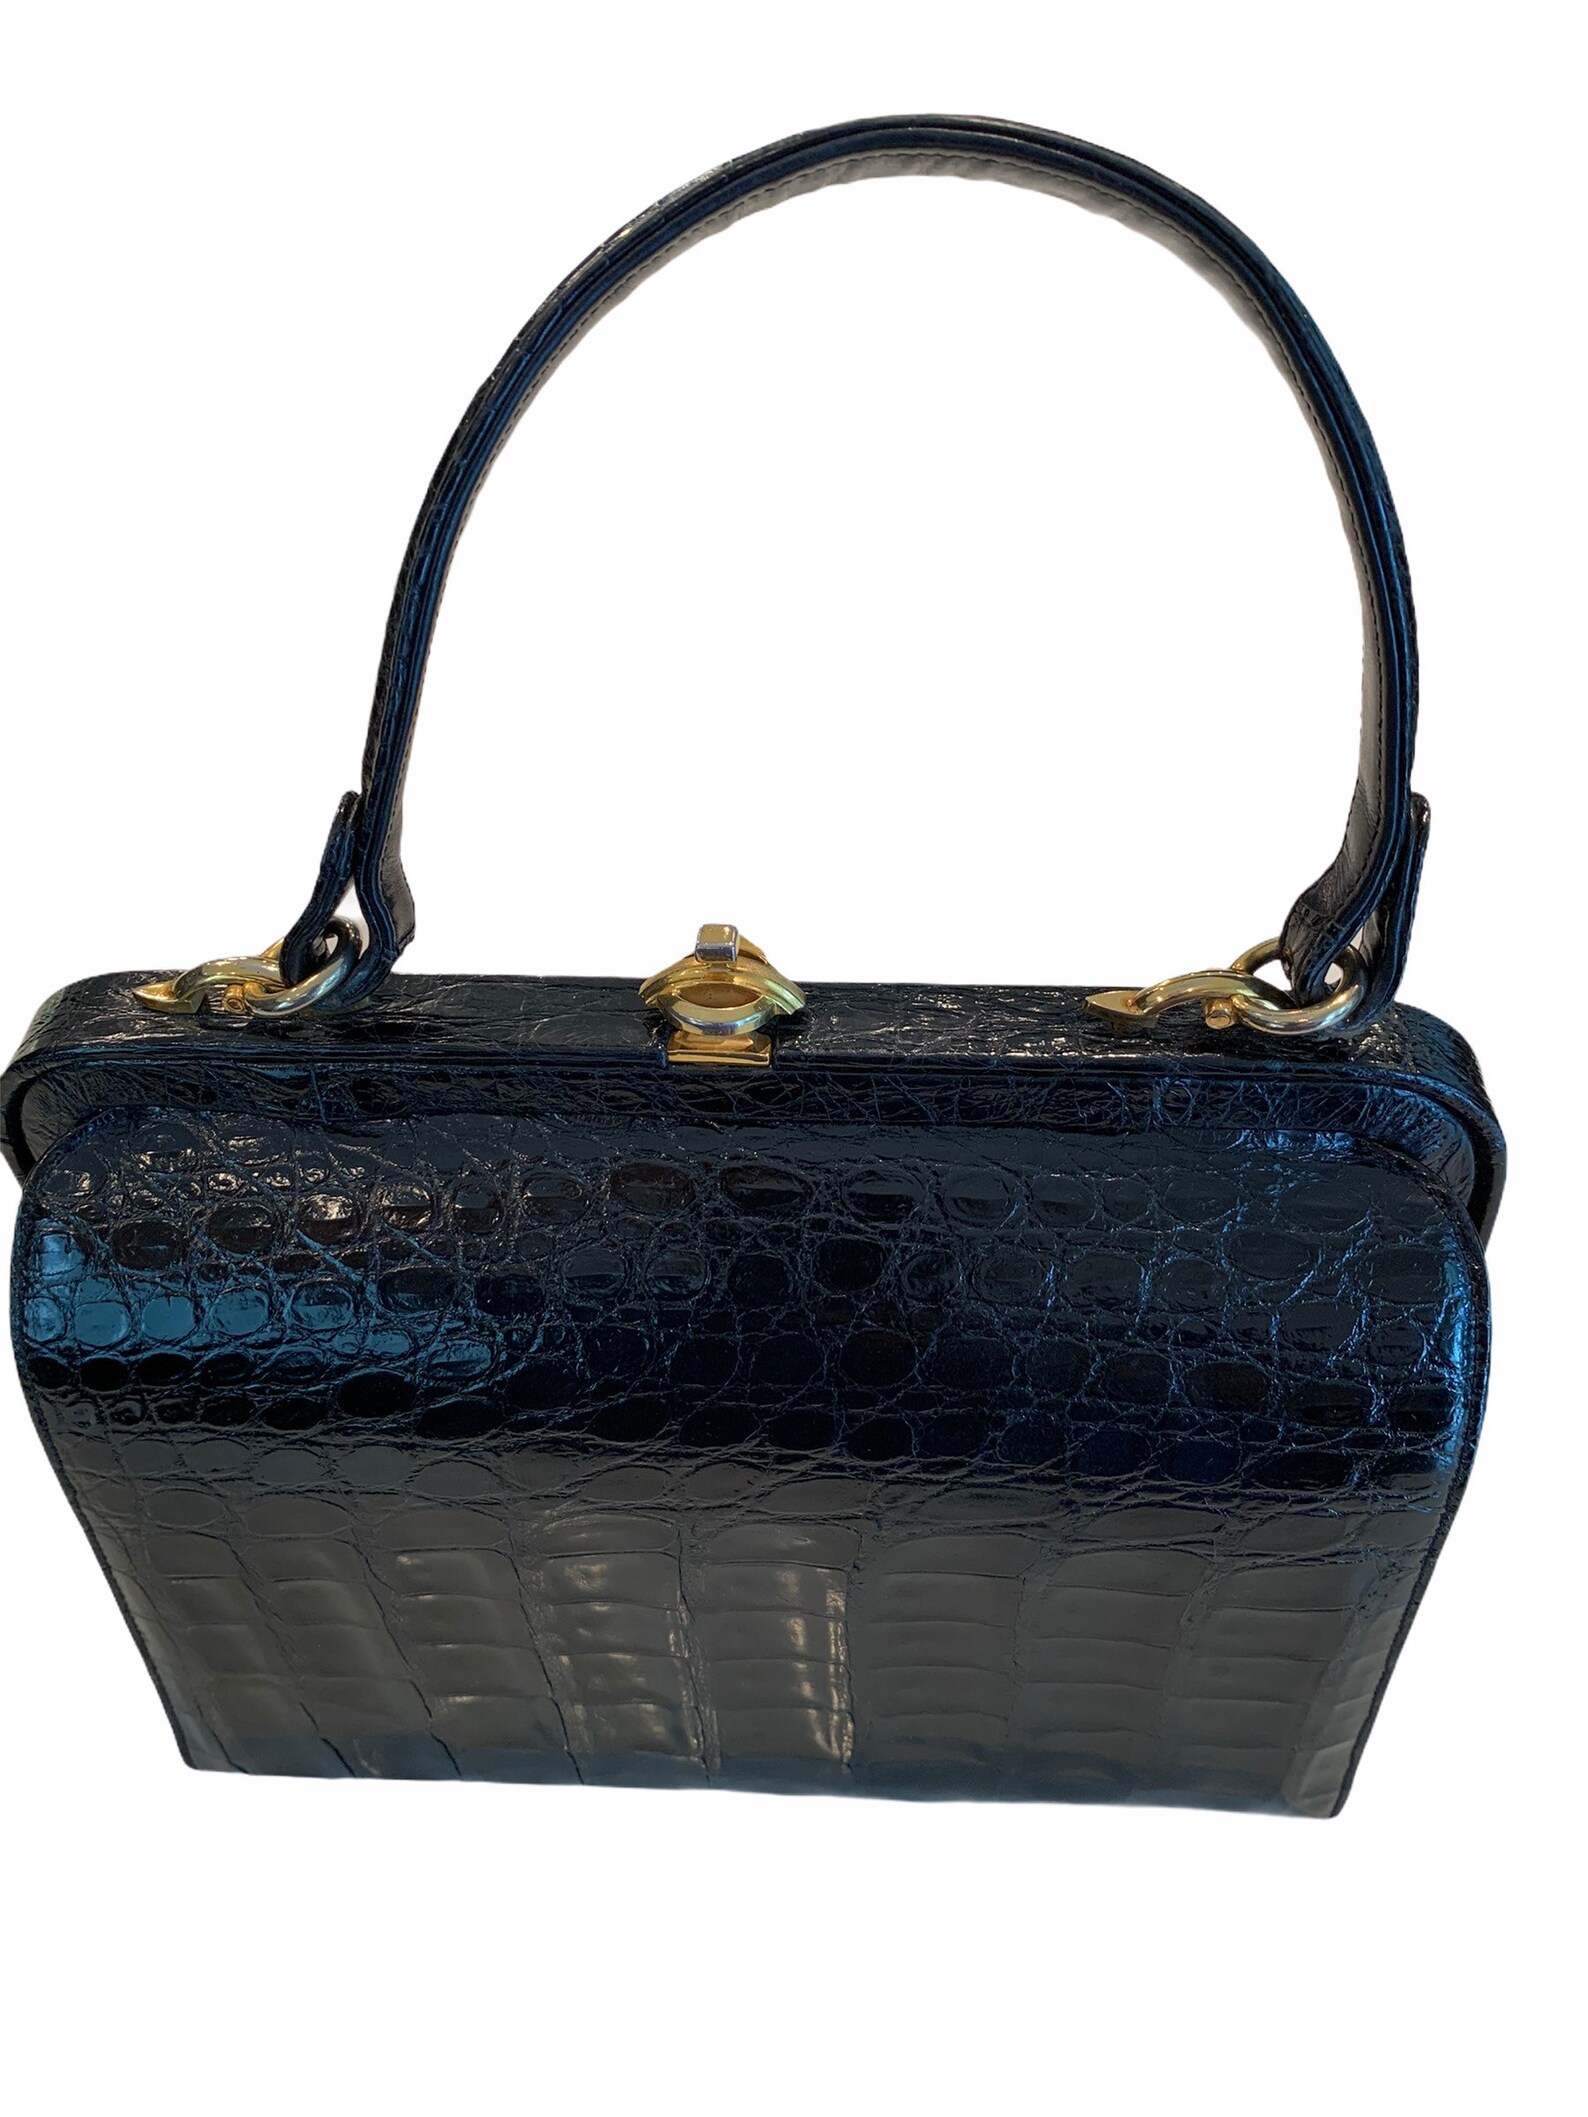 Alligator Handbag Vintage Manon Black Alligator Purse - Etsy